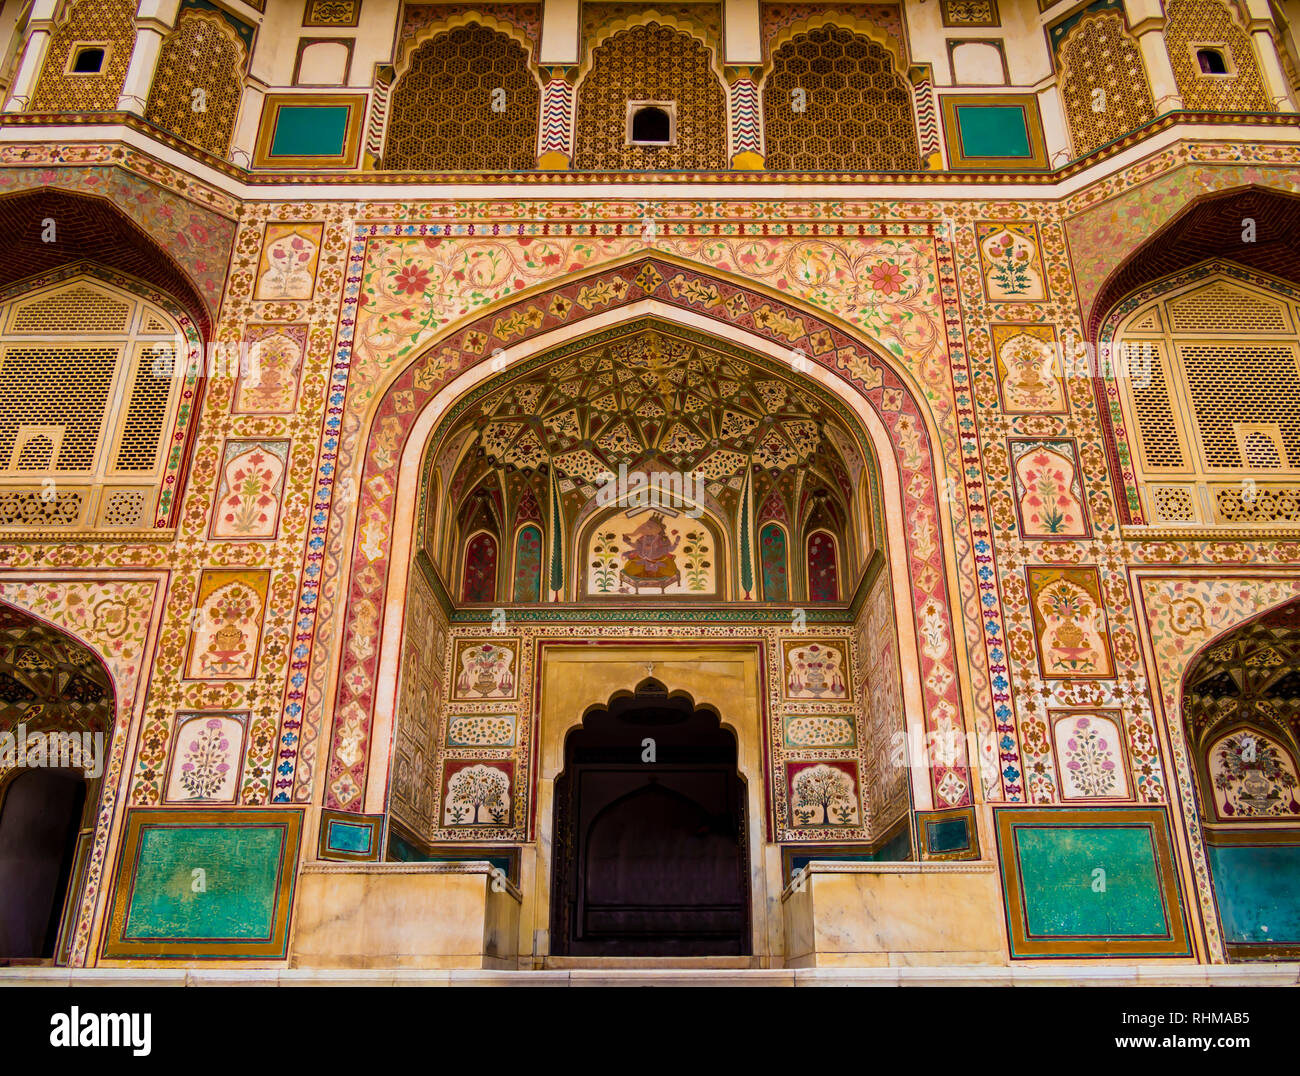 Eindrucksvolle Fassade von Ganesh Pol Eingang in Amber Fort Palace, Jaipur, Rajasthan, Indien Stockfoto